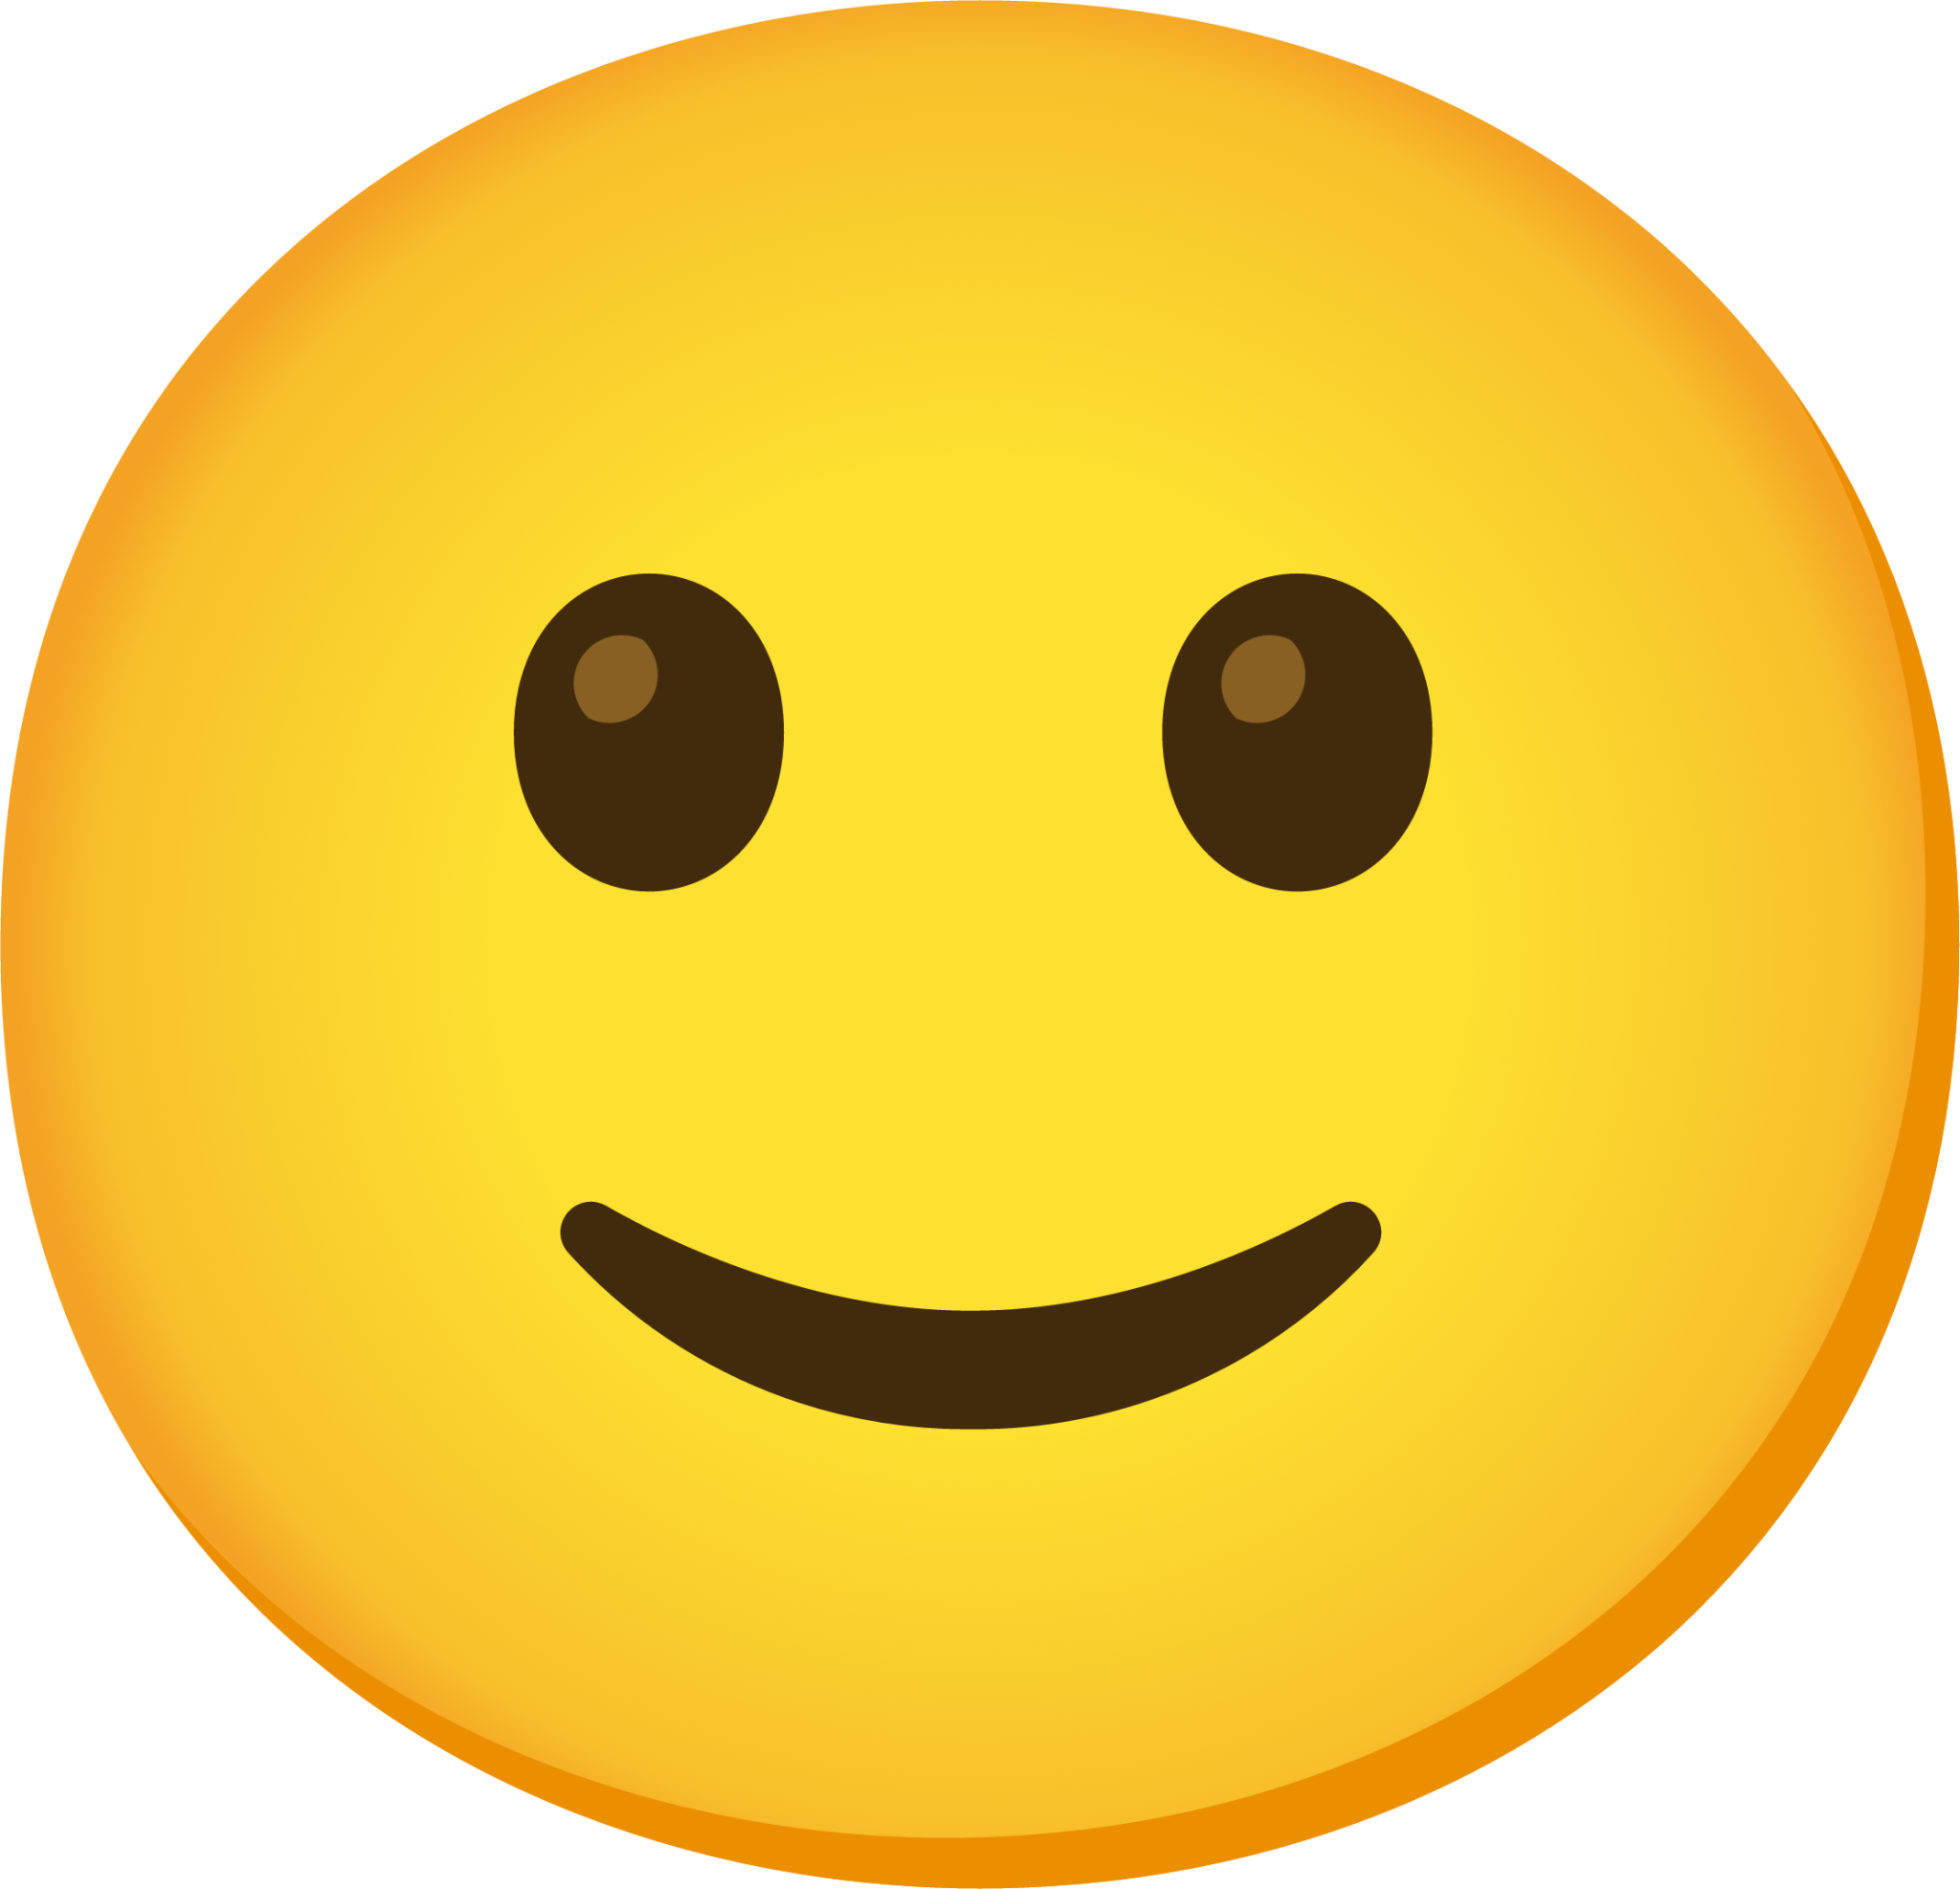 https://static-00.iconduck.com/assets.00/slightly-smiling-face-emoji-2048x1974-5msgqz9c.png